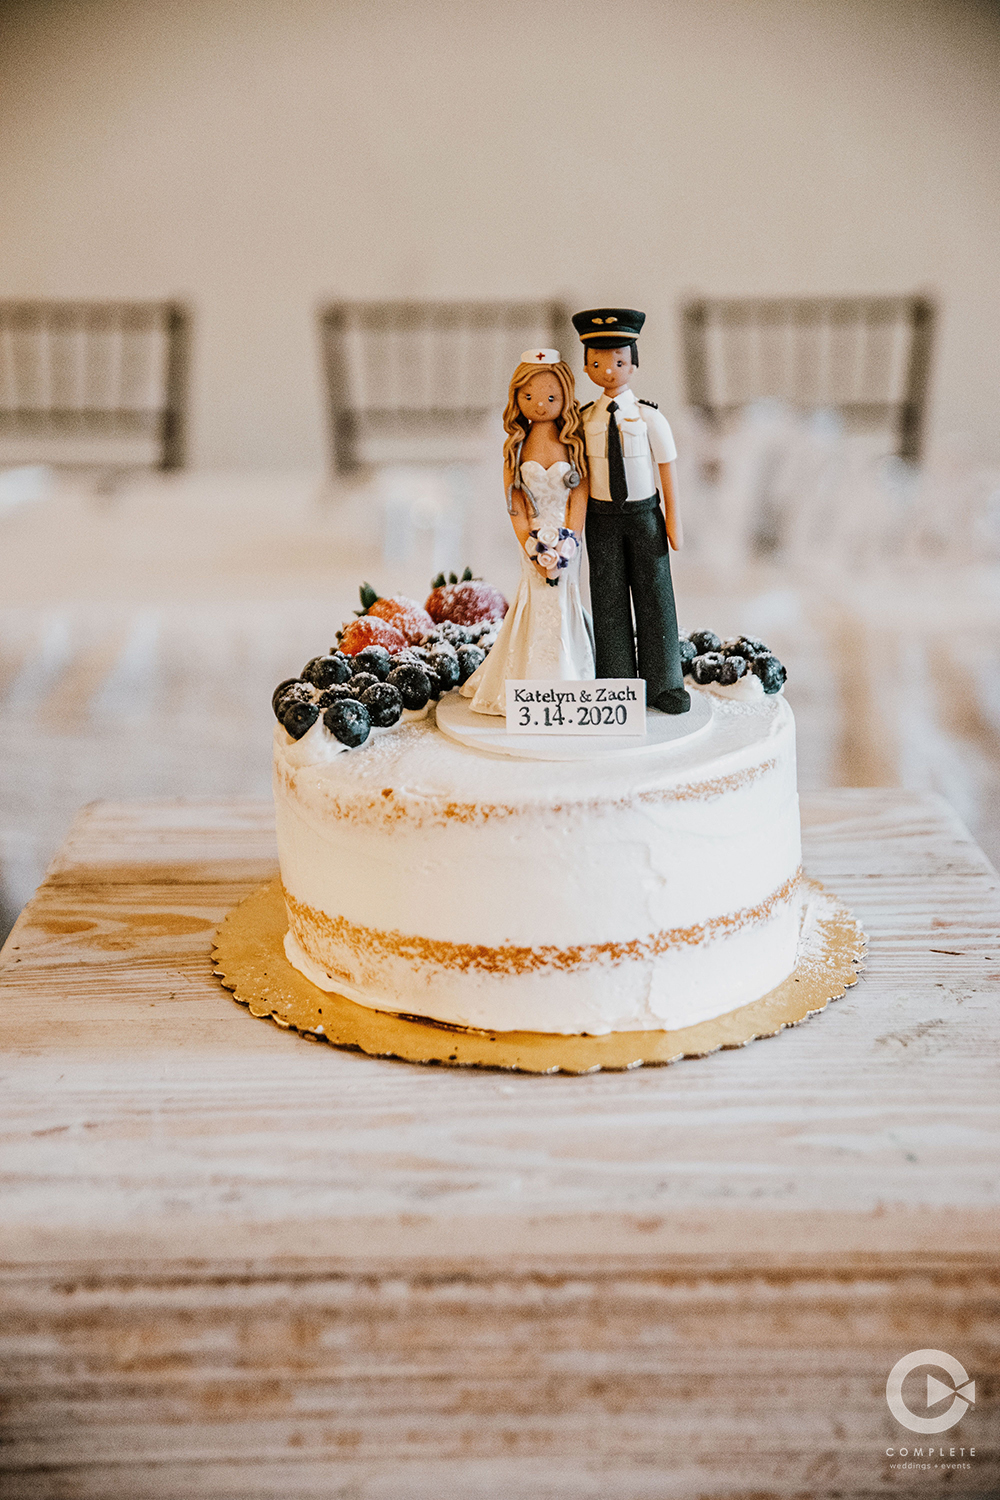 Wedding Cake - Planning Checklist at reception